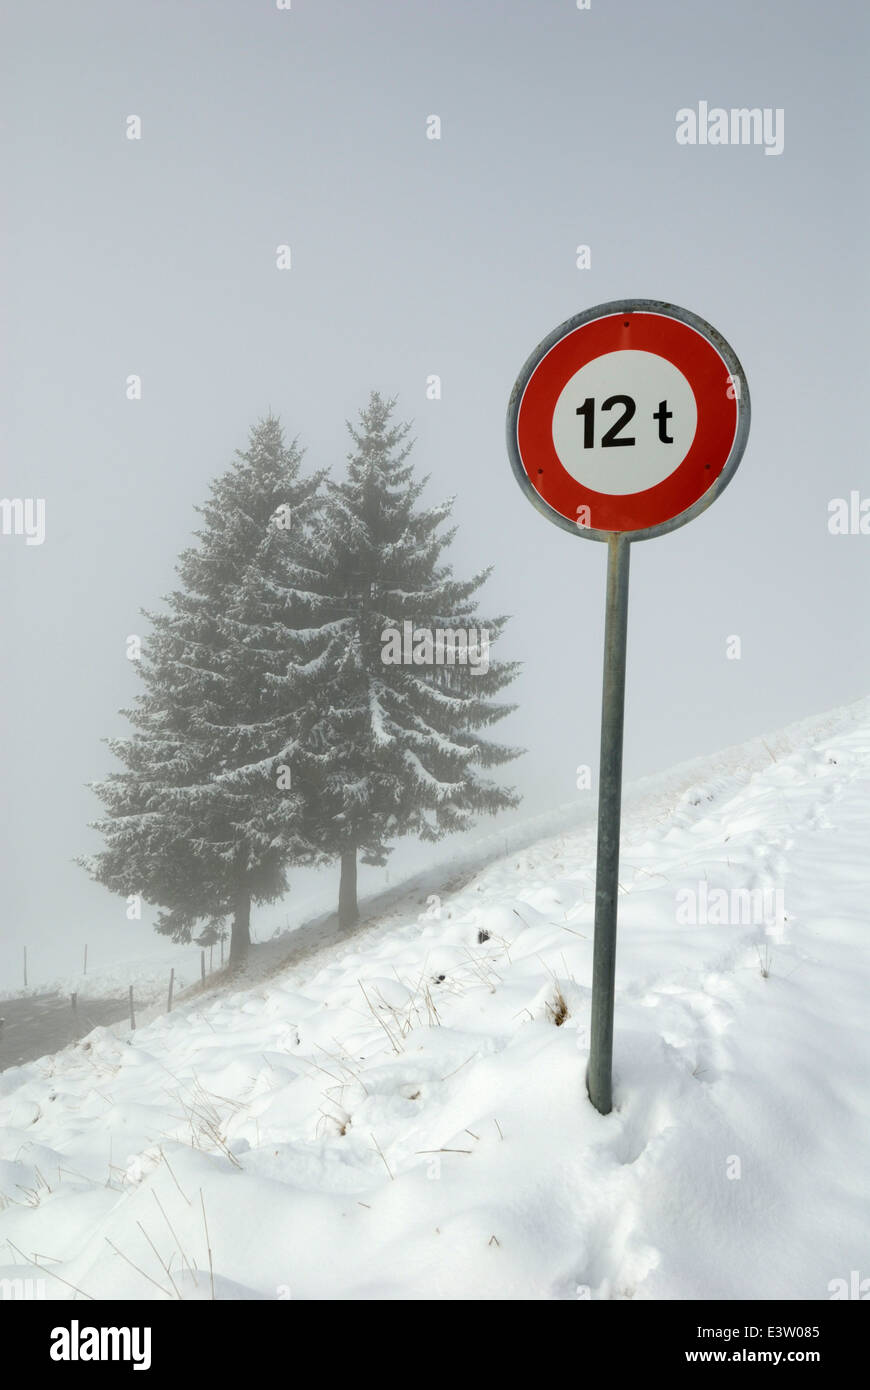 12 tonne round weight restriction road sign, Switzerland, Europe Stock Photo